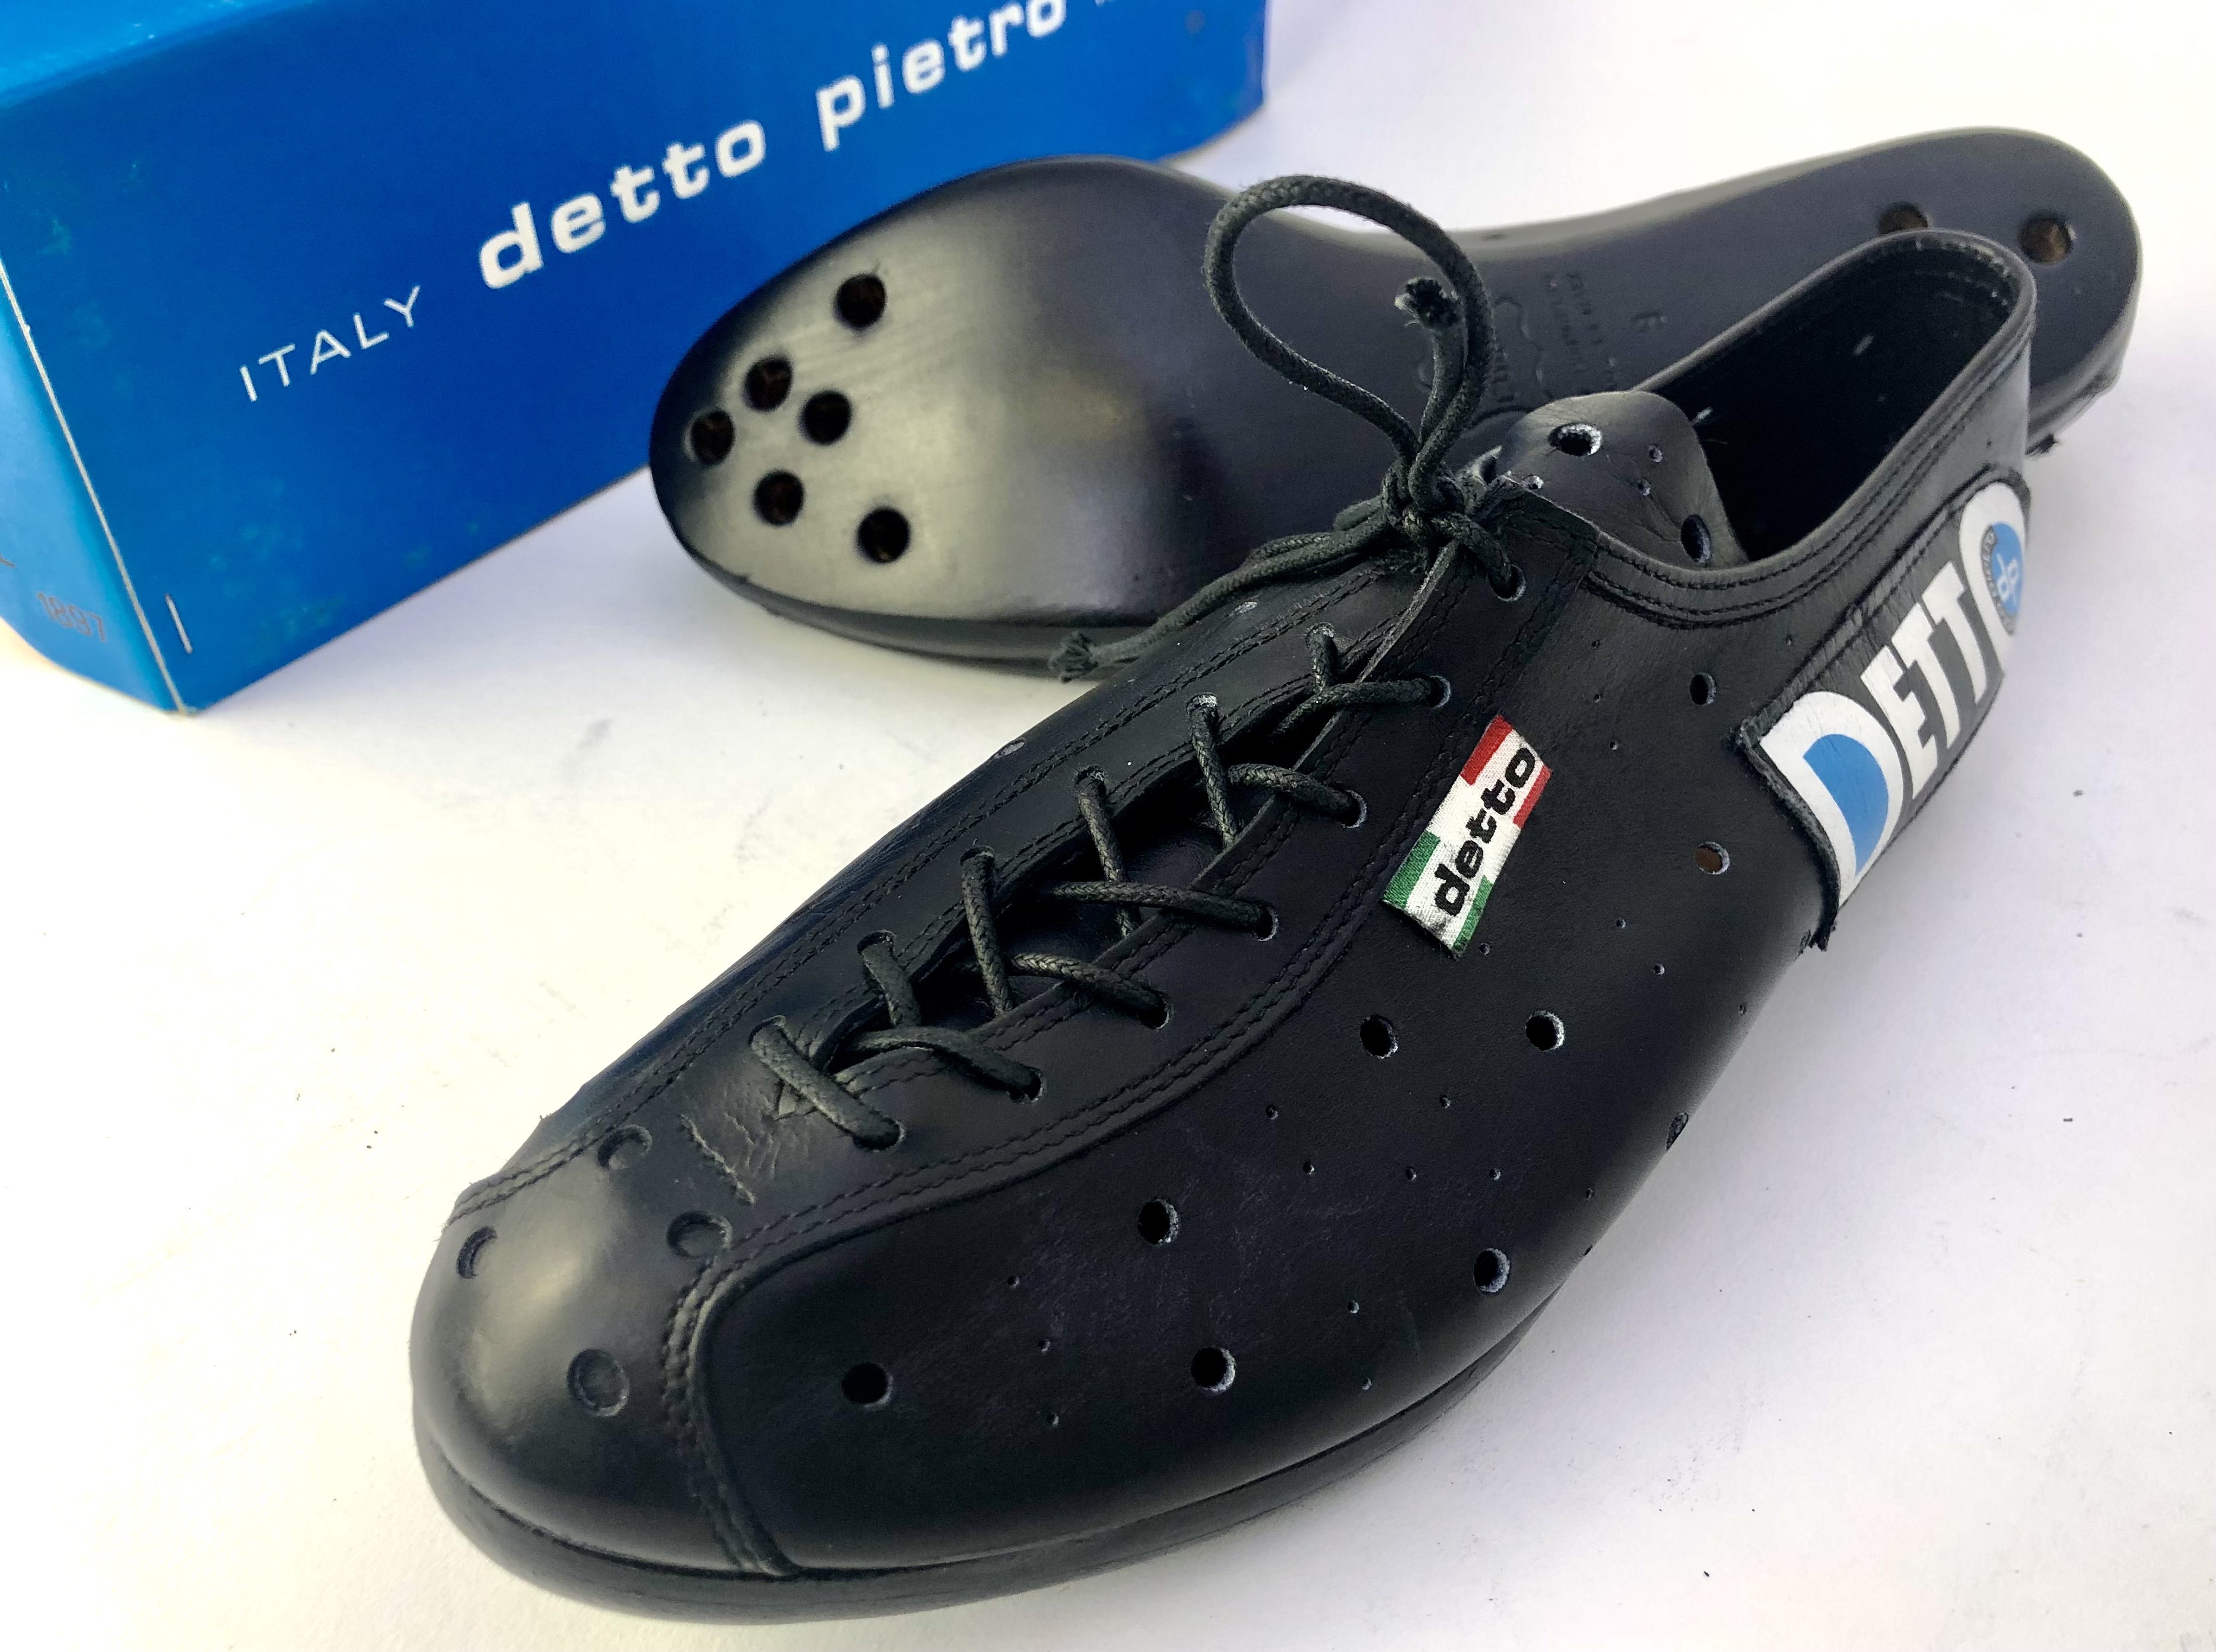 NOS Vintage Detto Pietro Mod. 84 Cycling Shoes Size 37